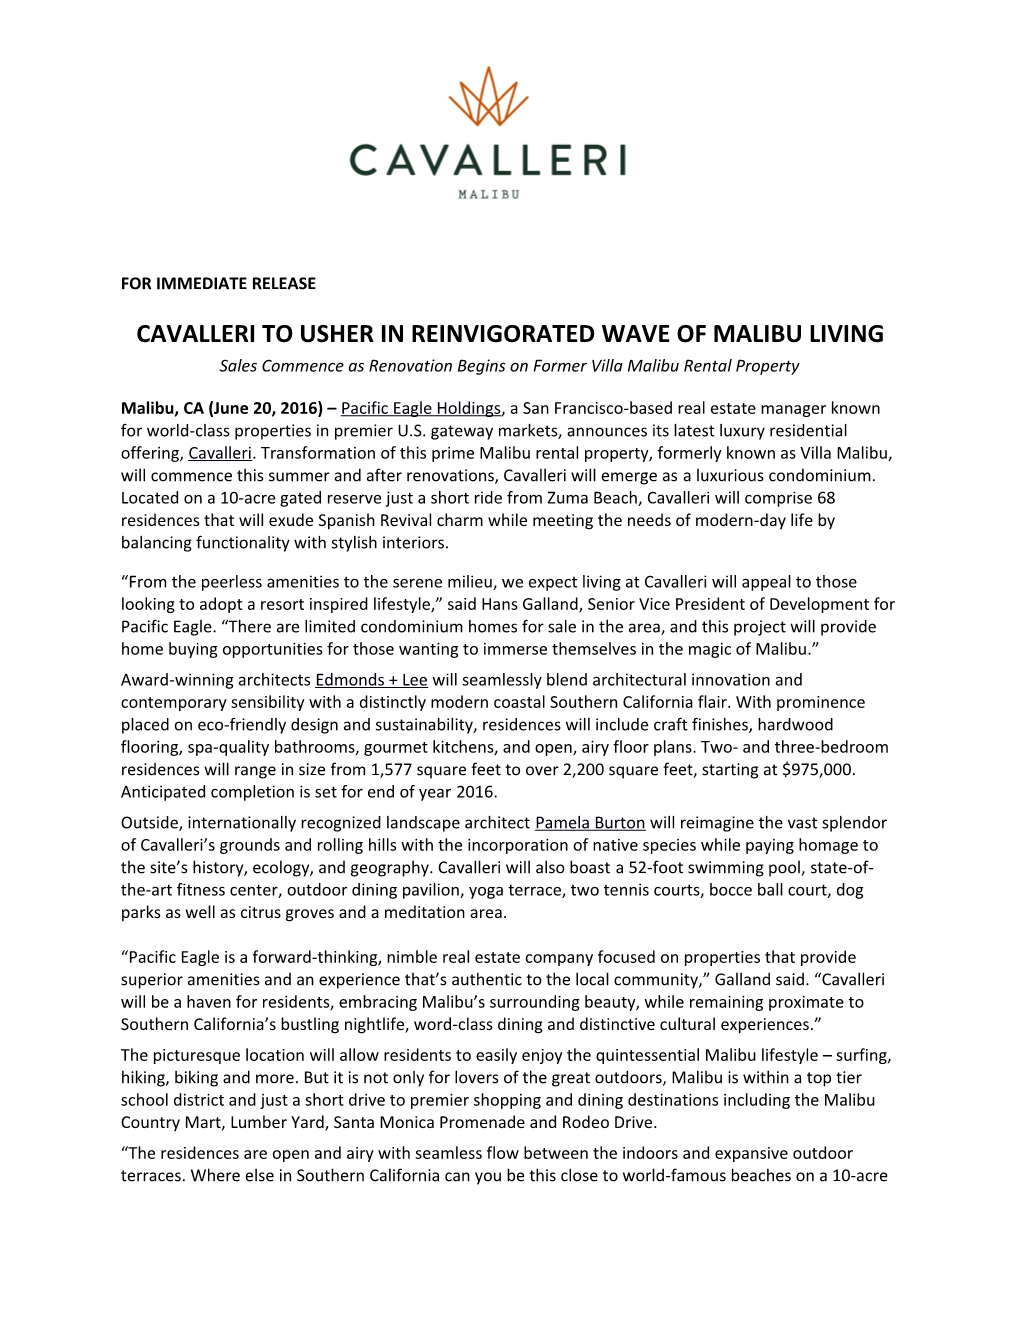 Cavalleri to Usher in Reinvigorated Wave of Malibu Living